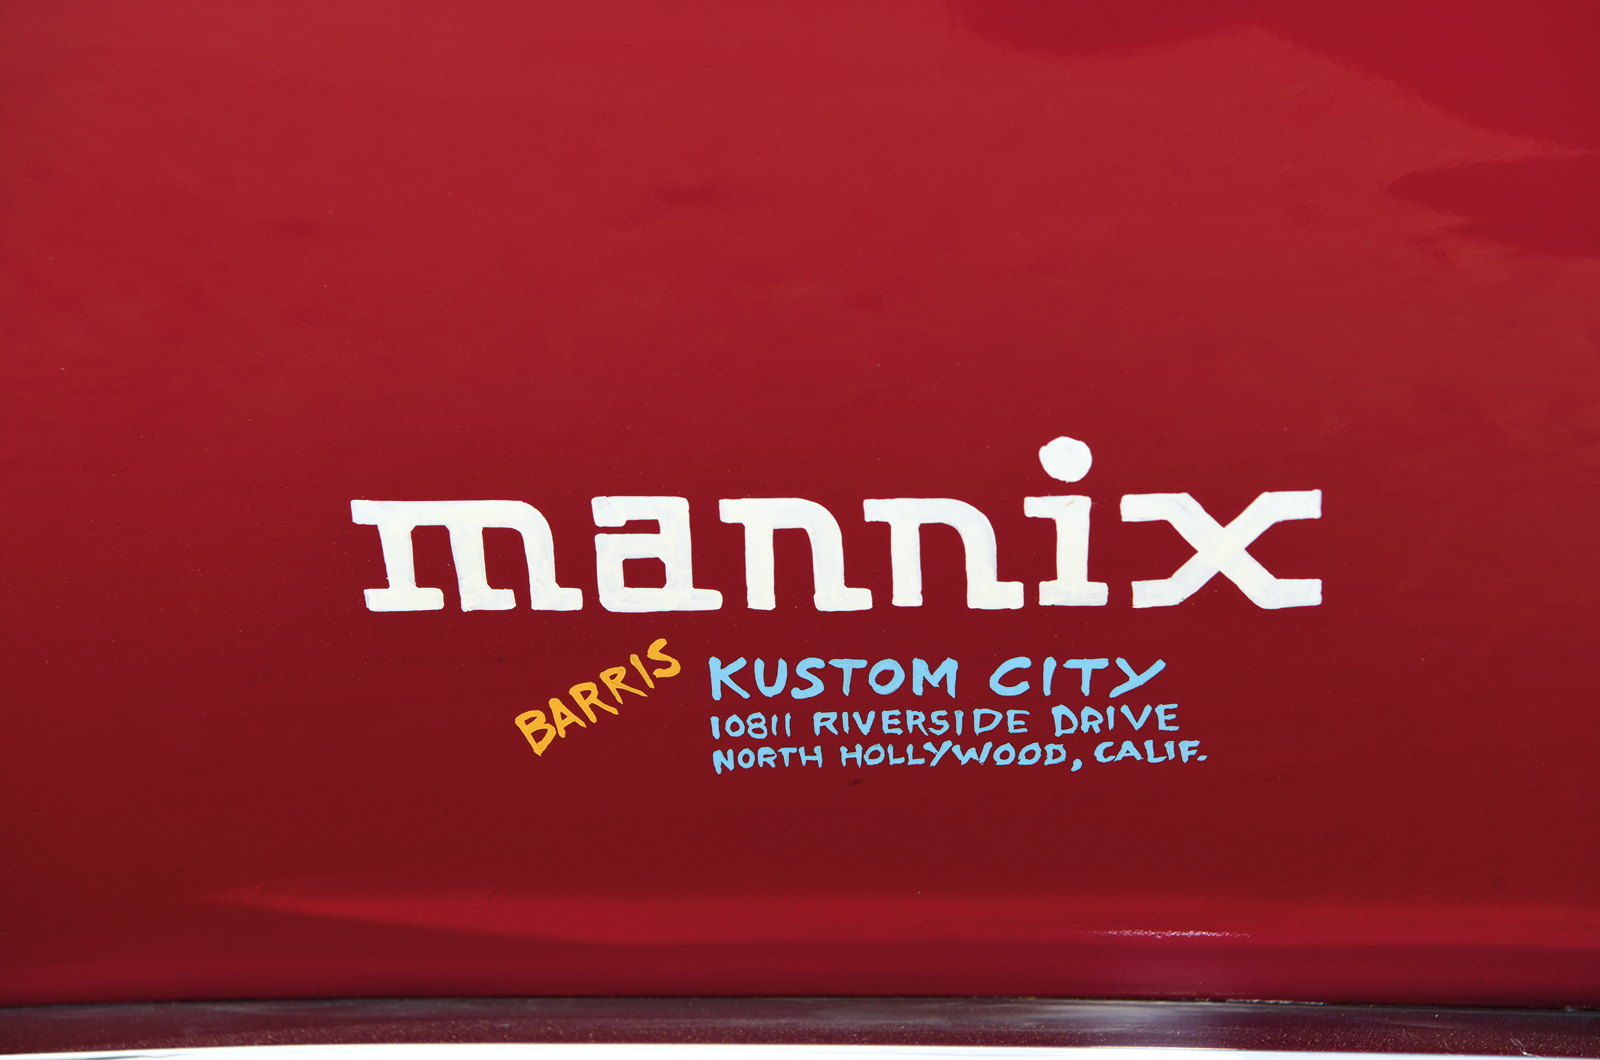 Classic & Sports Car – Mannix Oldsmobile Toronado: the least undercover cop car ever?